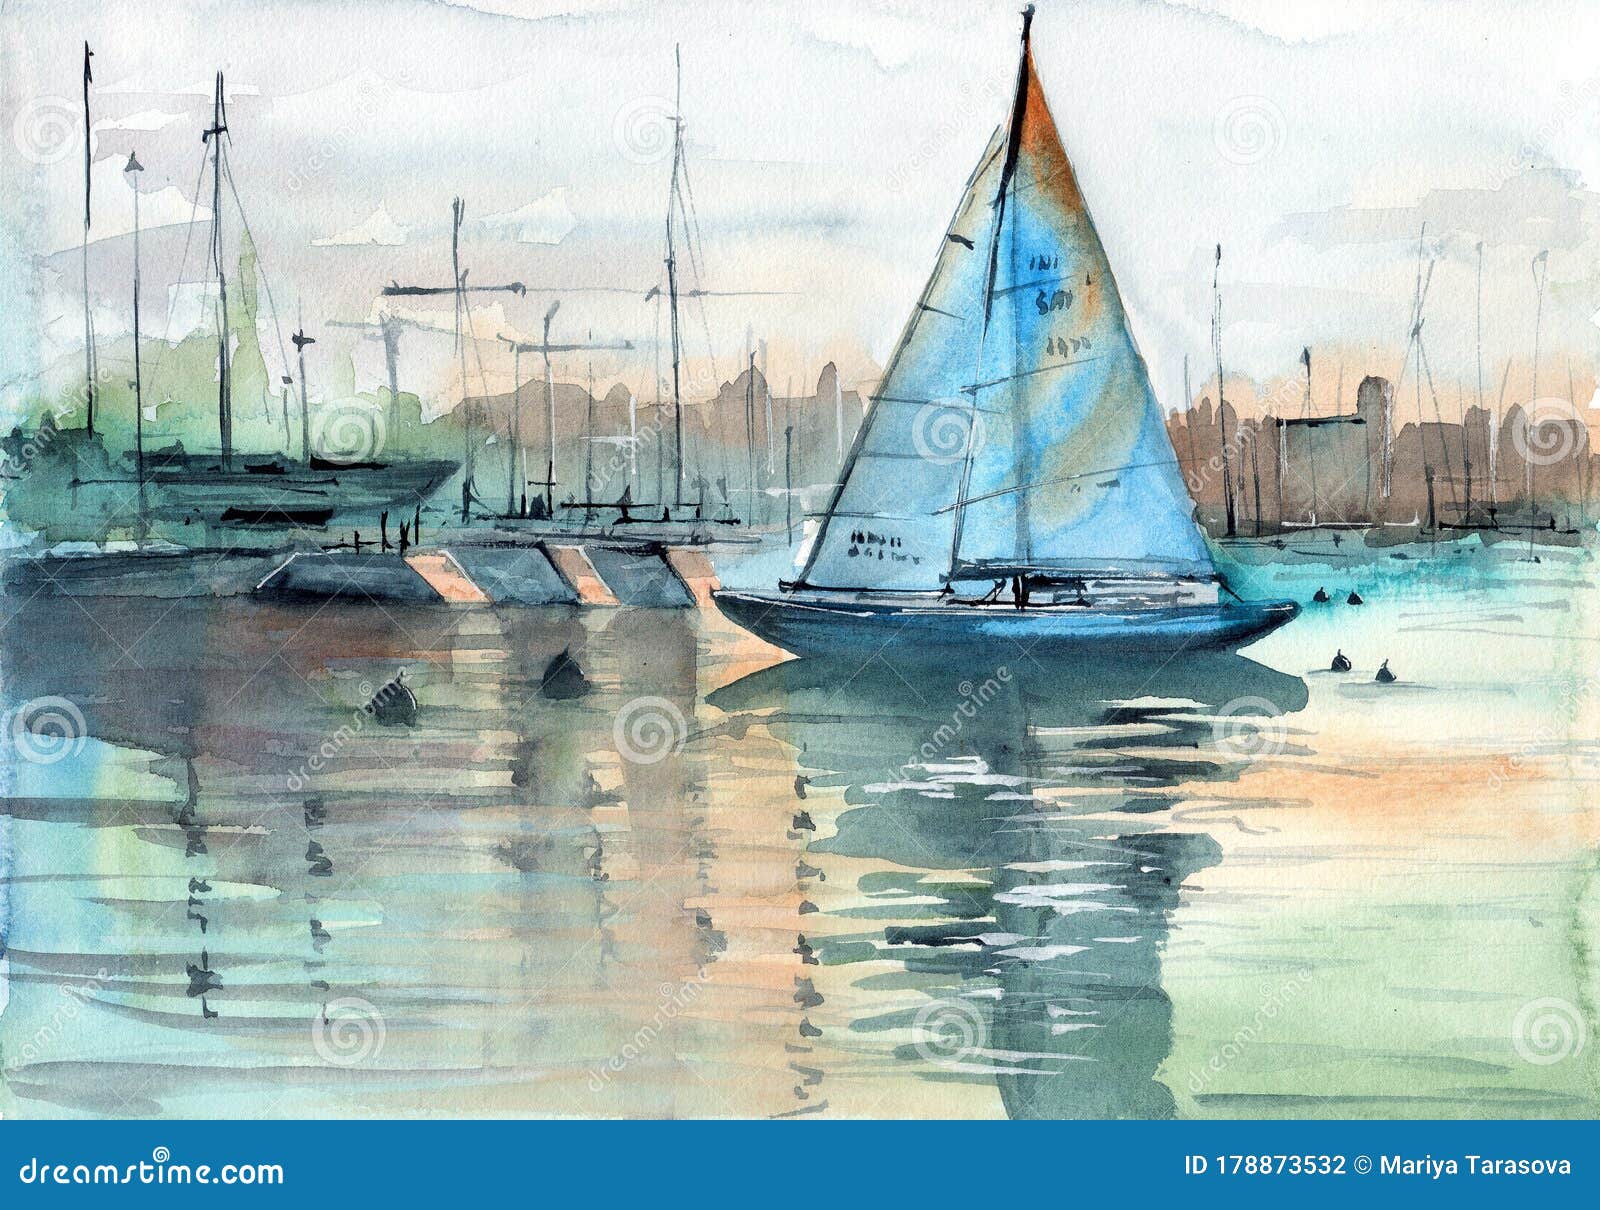 watercolor  of a sailboat